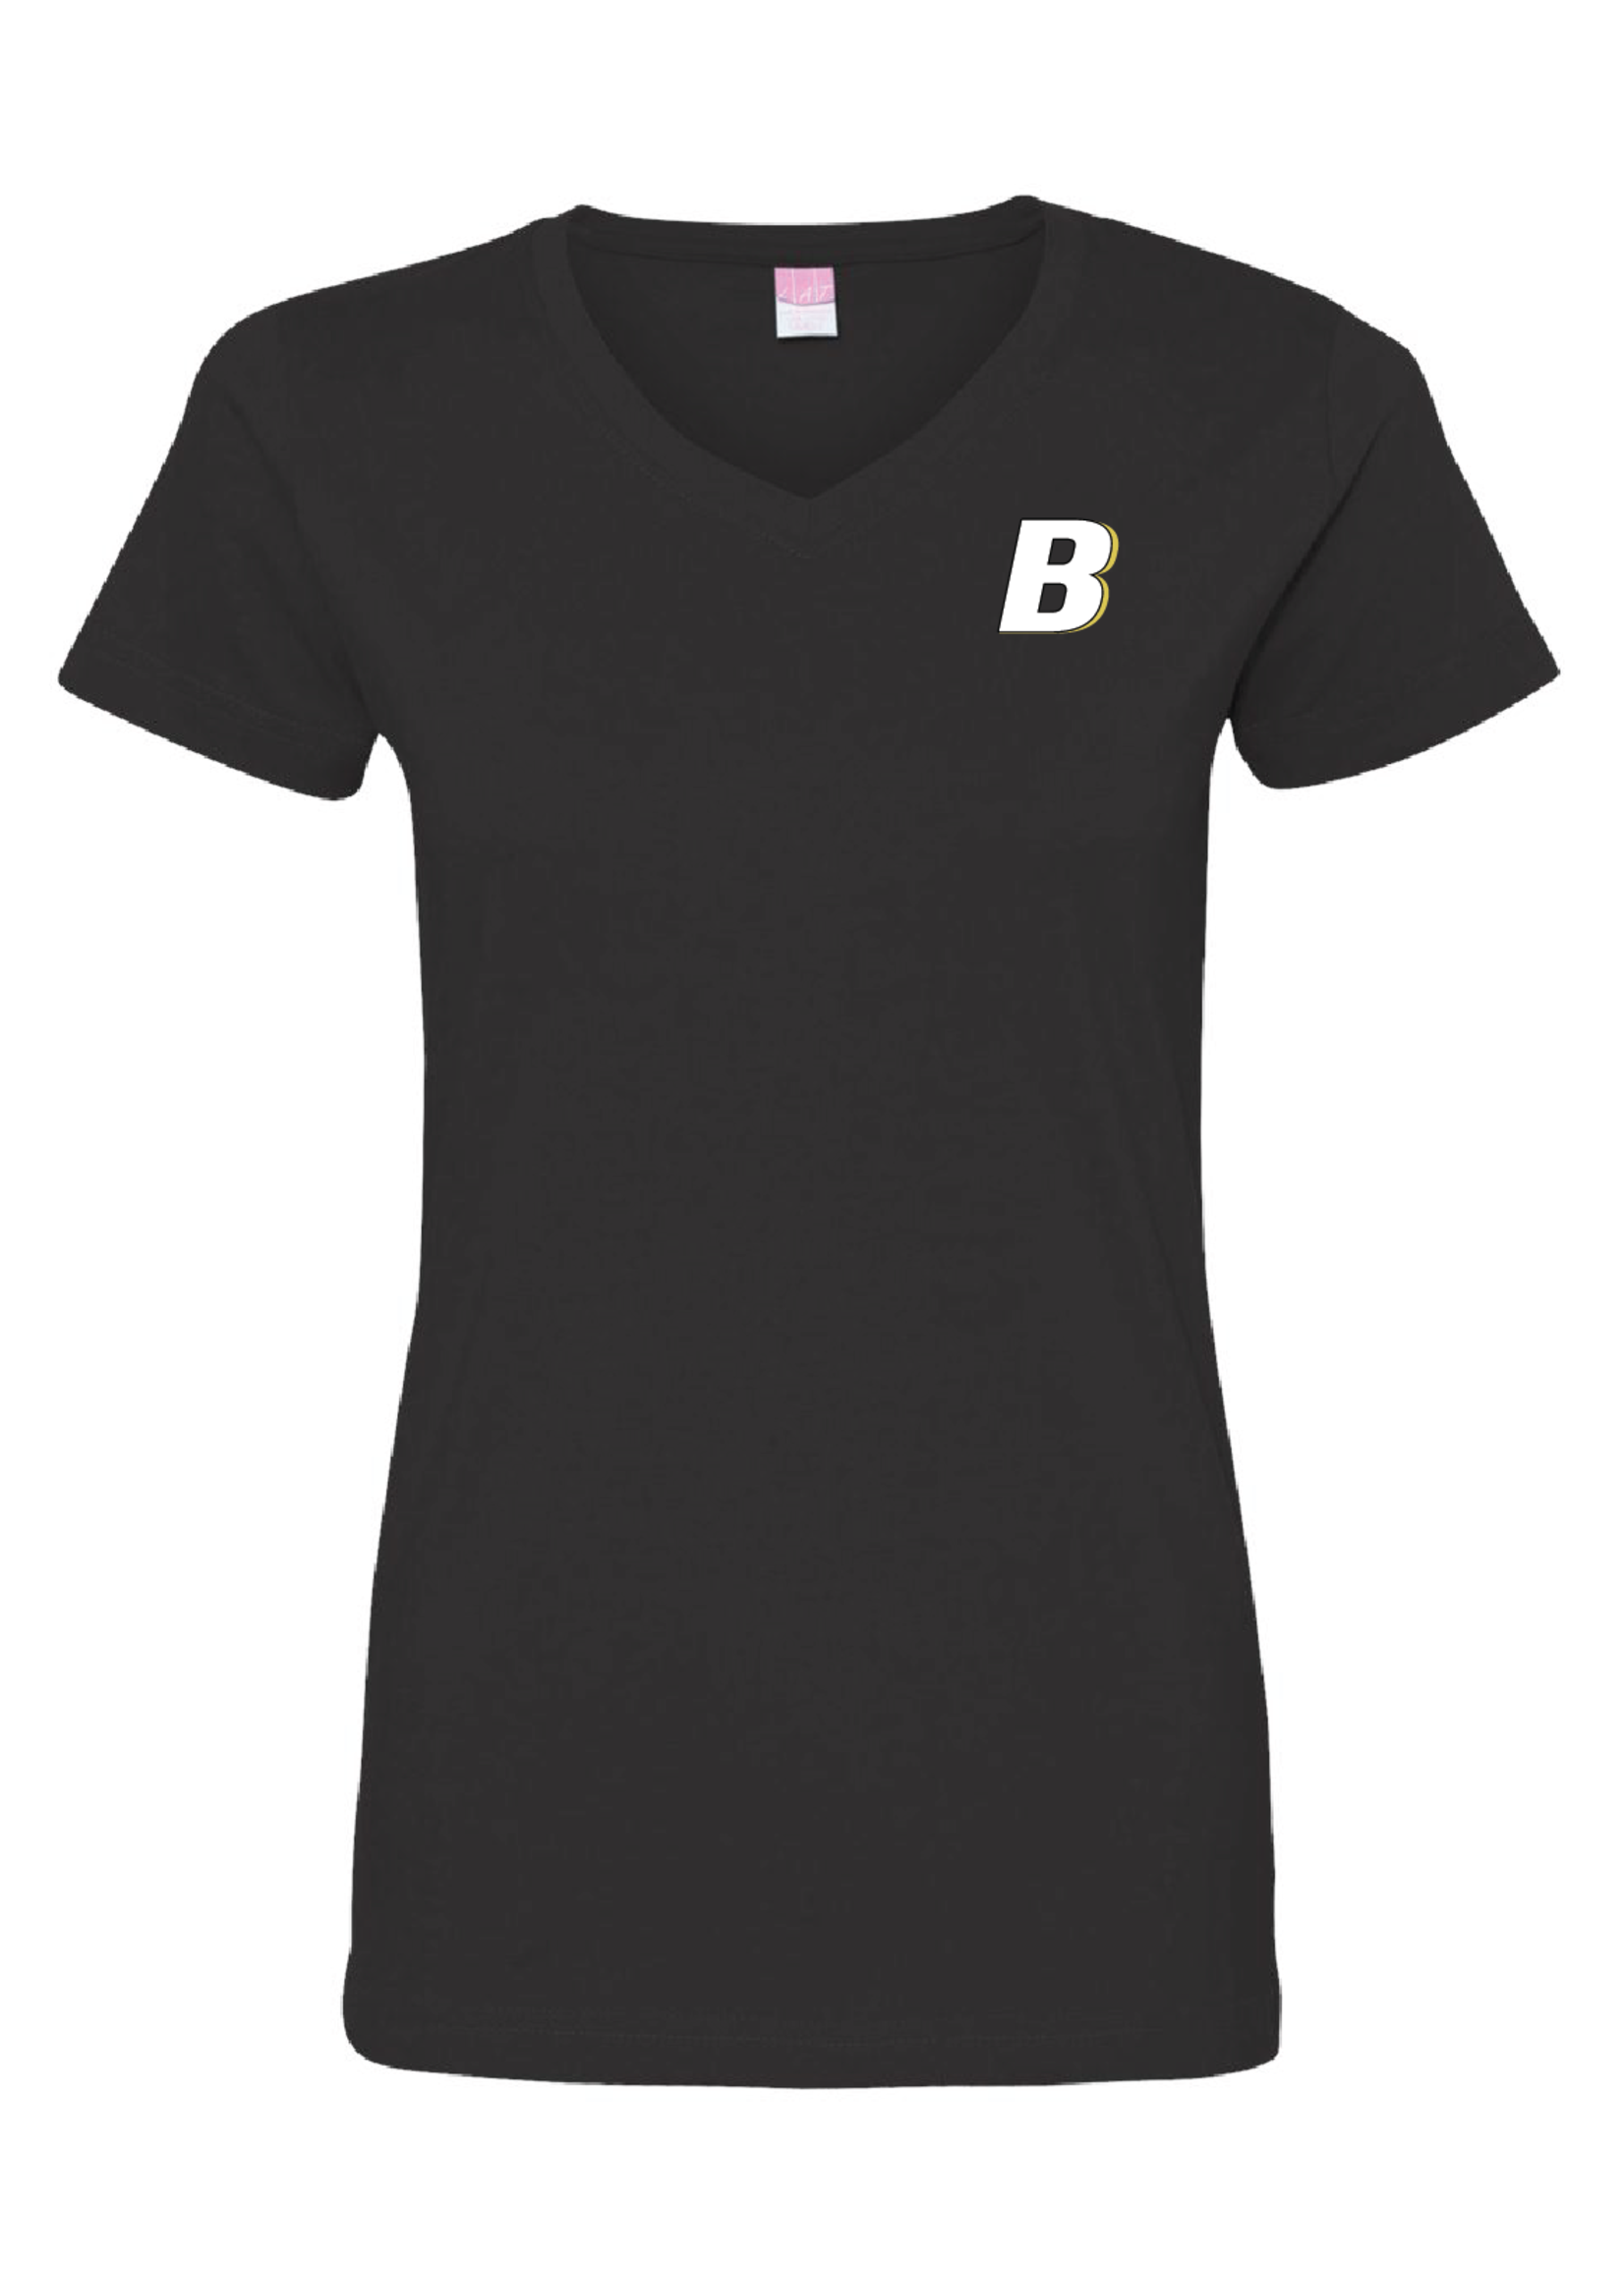 BBA 100% Cotton Ladies Fit T-Shirt